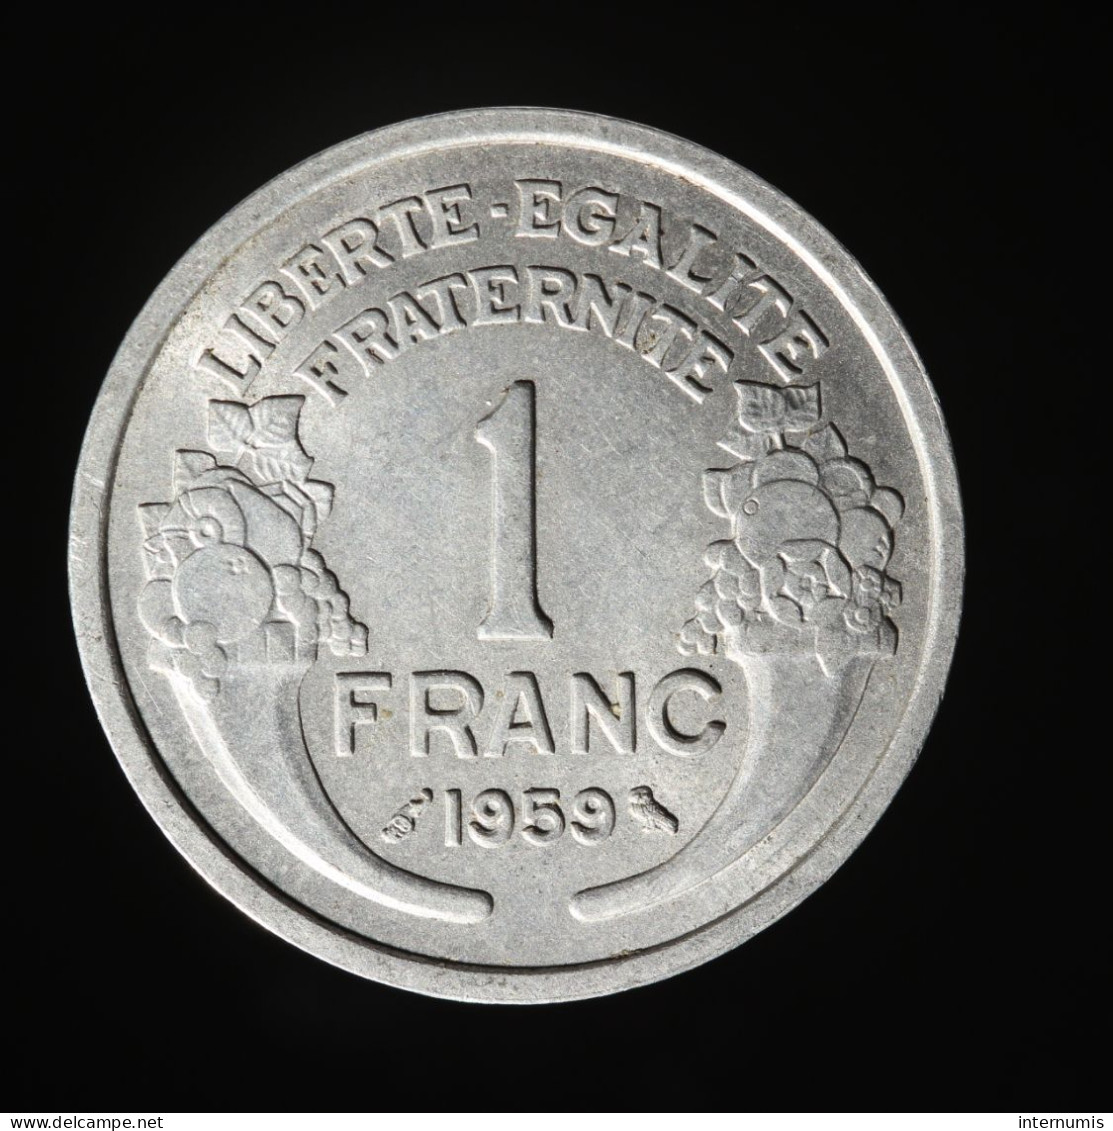  France, , 1 Franc, 1959, , Aluminium, SUP (AU),
KM#885a.1, G.473, F.221 - 1 Franc